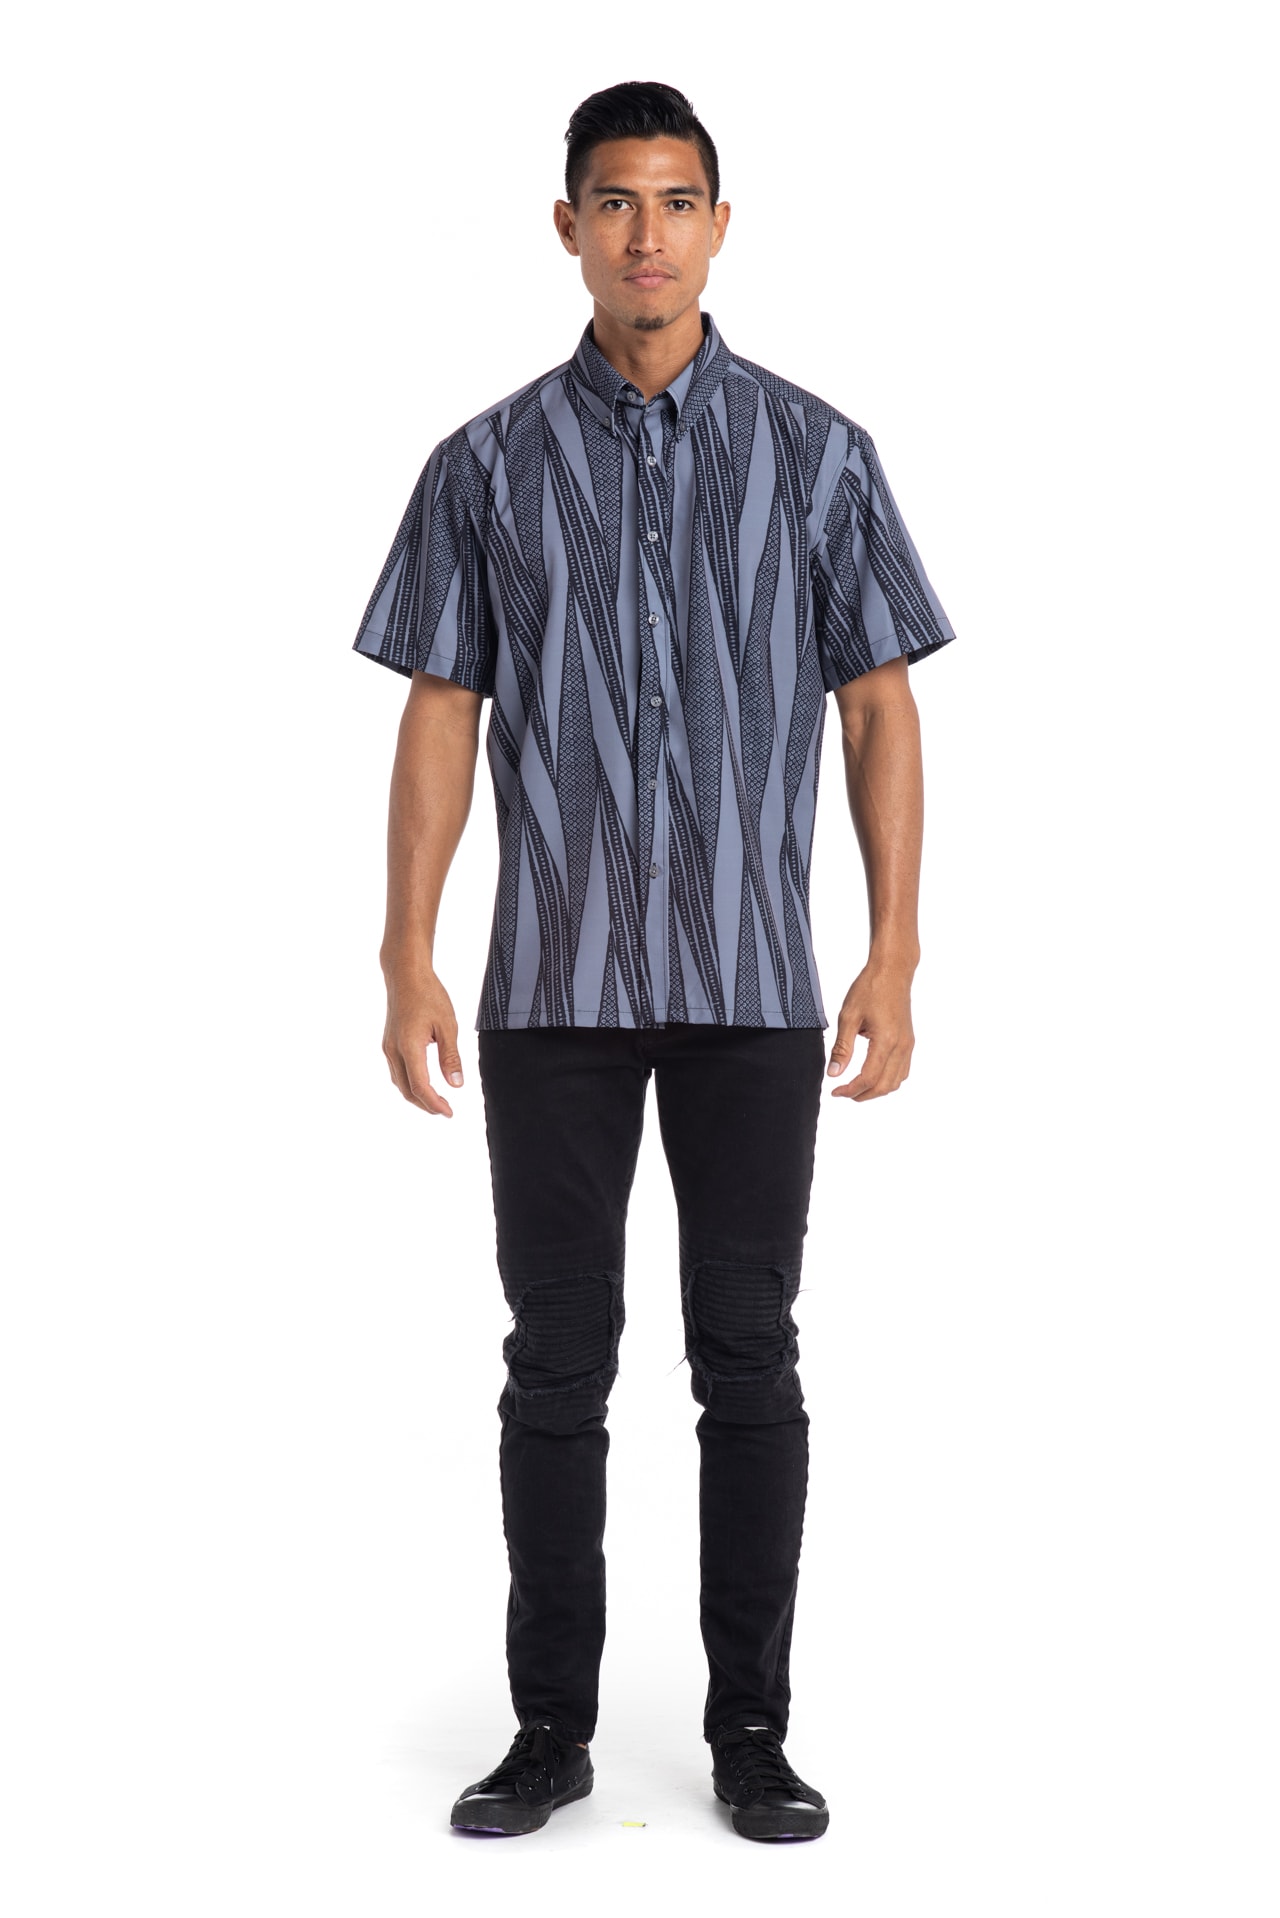 Male model wearing Mahalo Shirt in Gret Kialoa - Front View